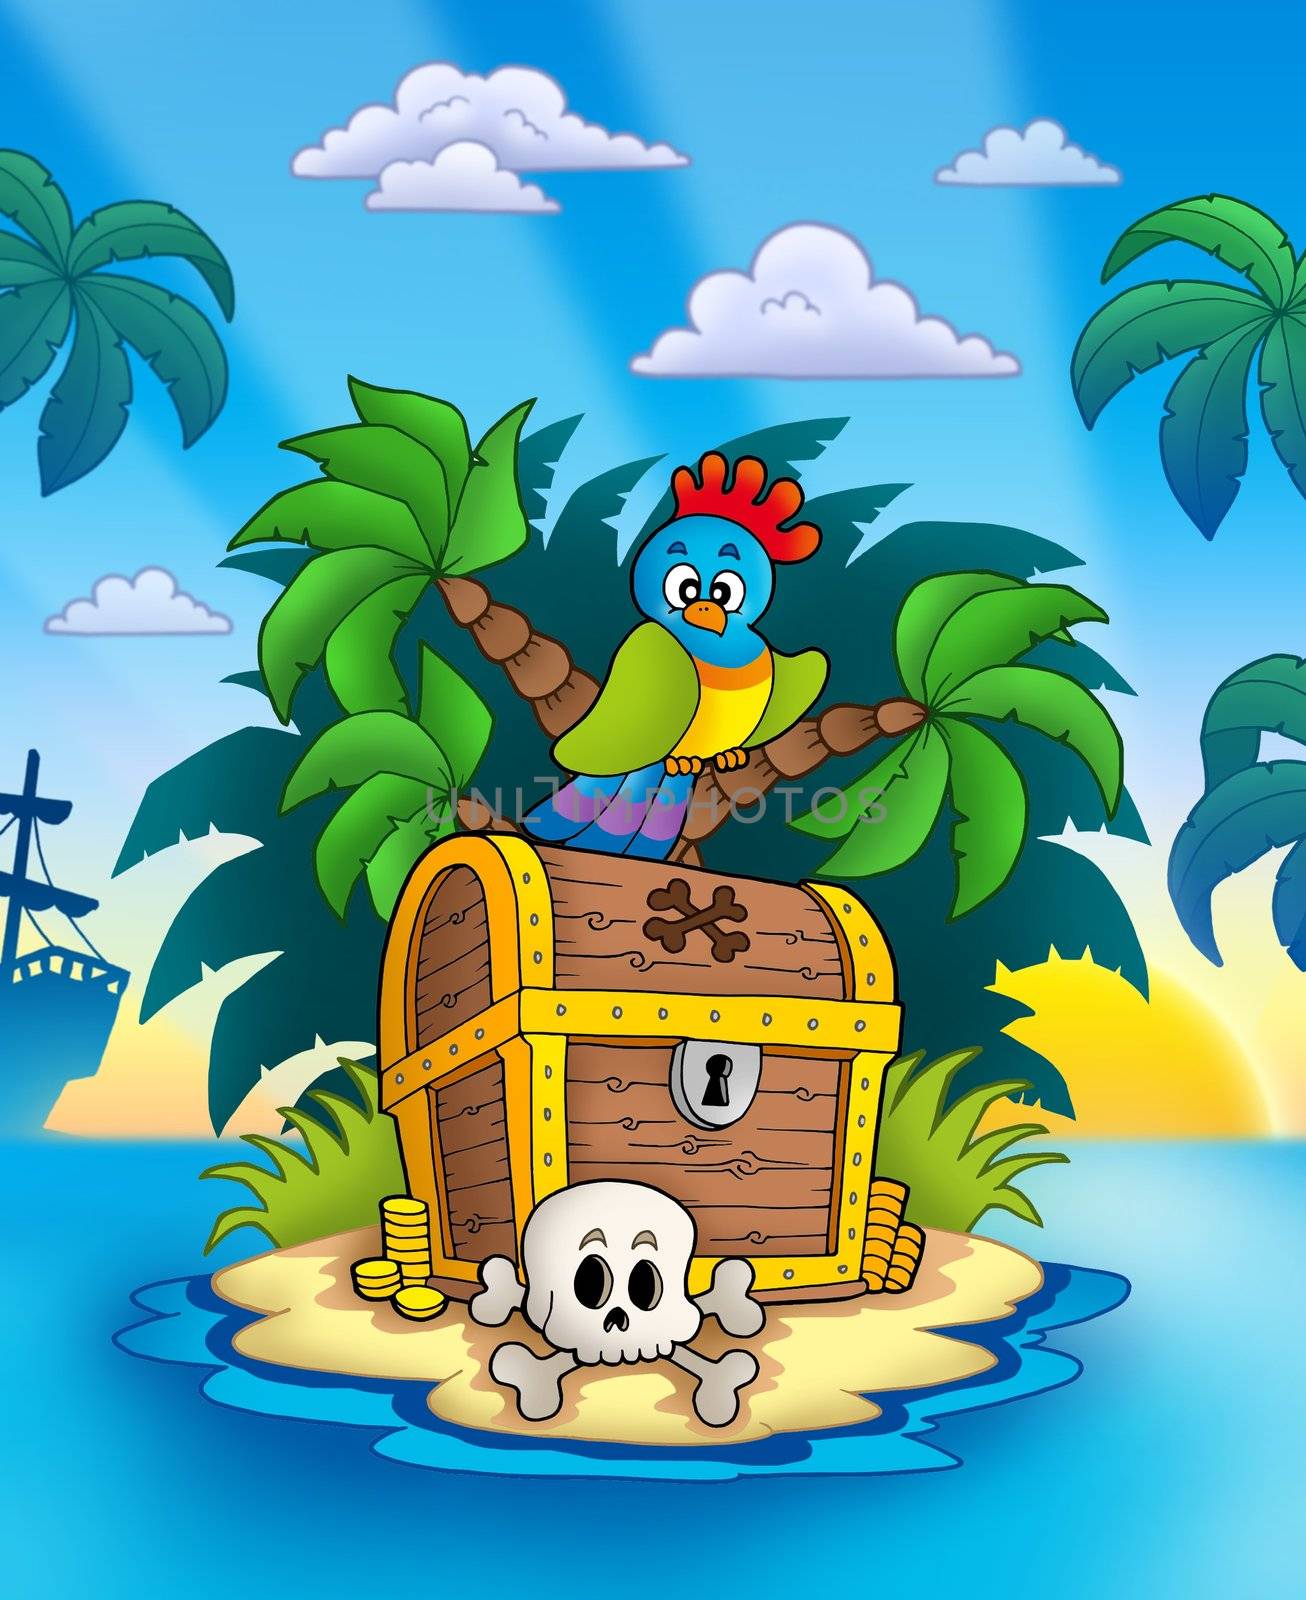 Treasure island with sunset - color illustration.